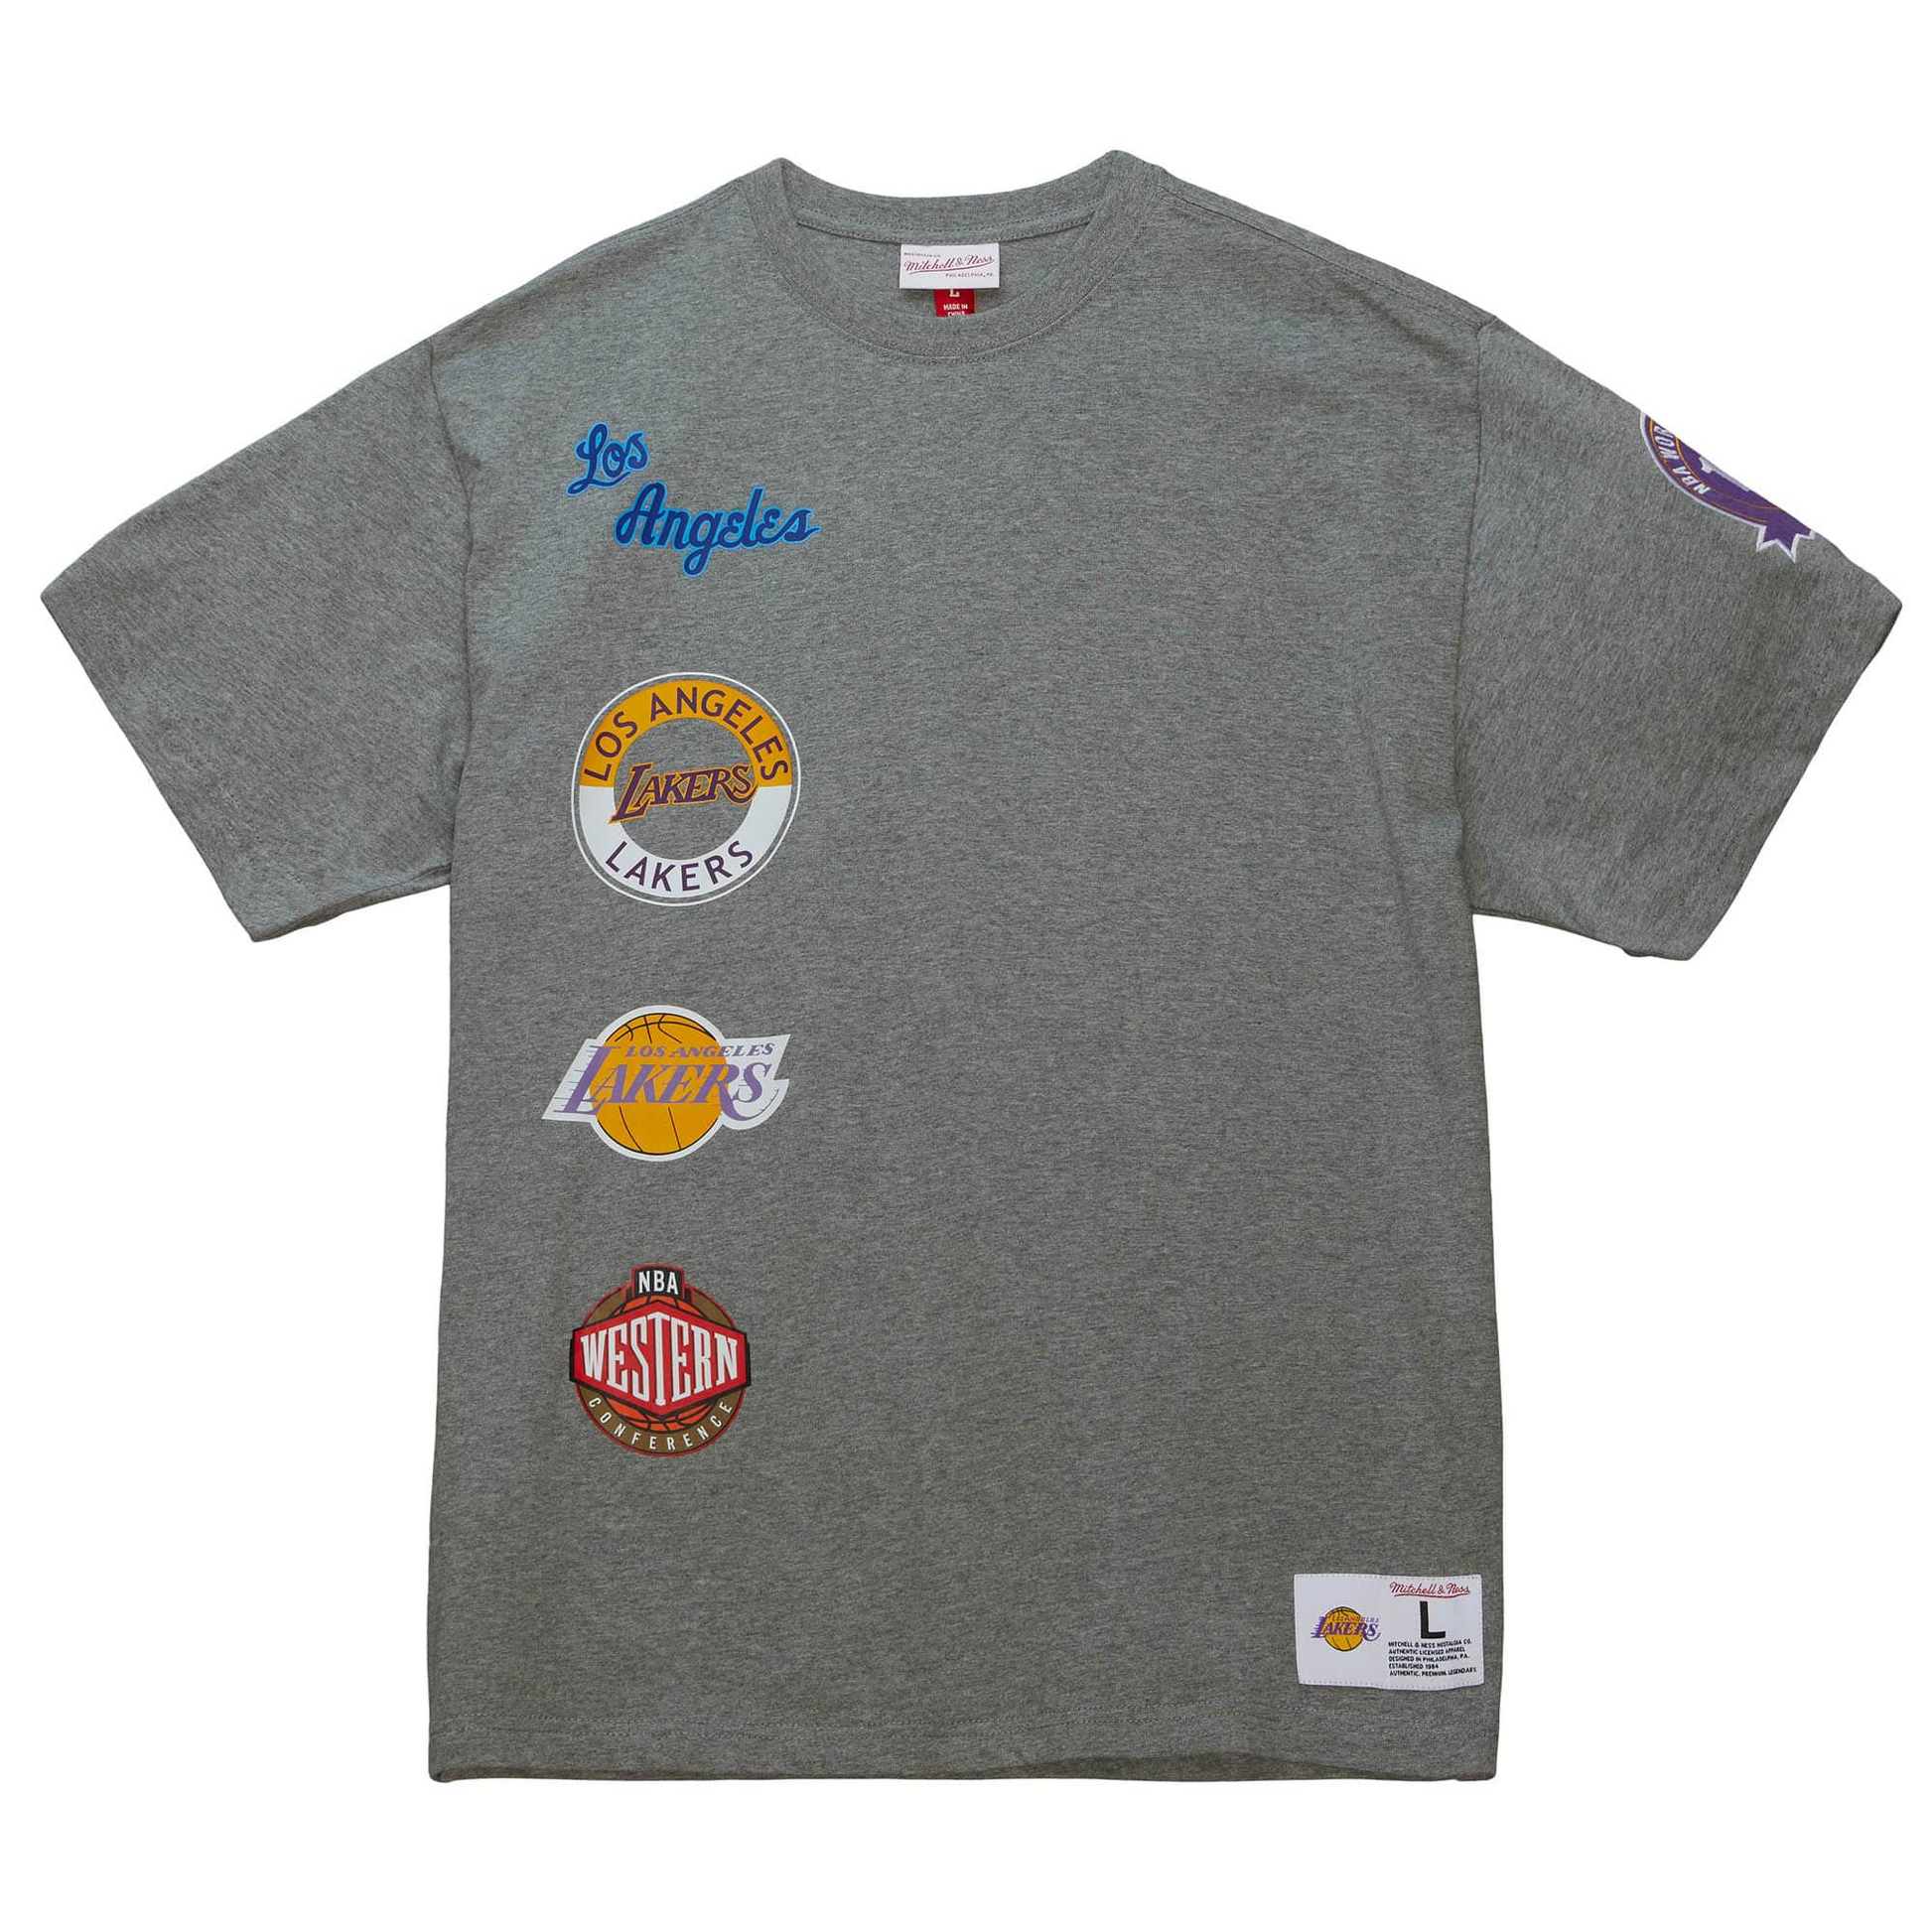 Camiseta manga corta de los Angeles Lakers para junior